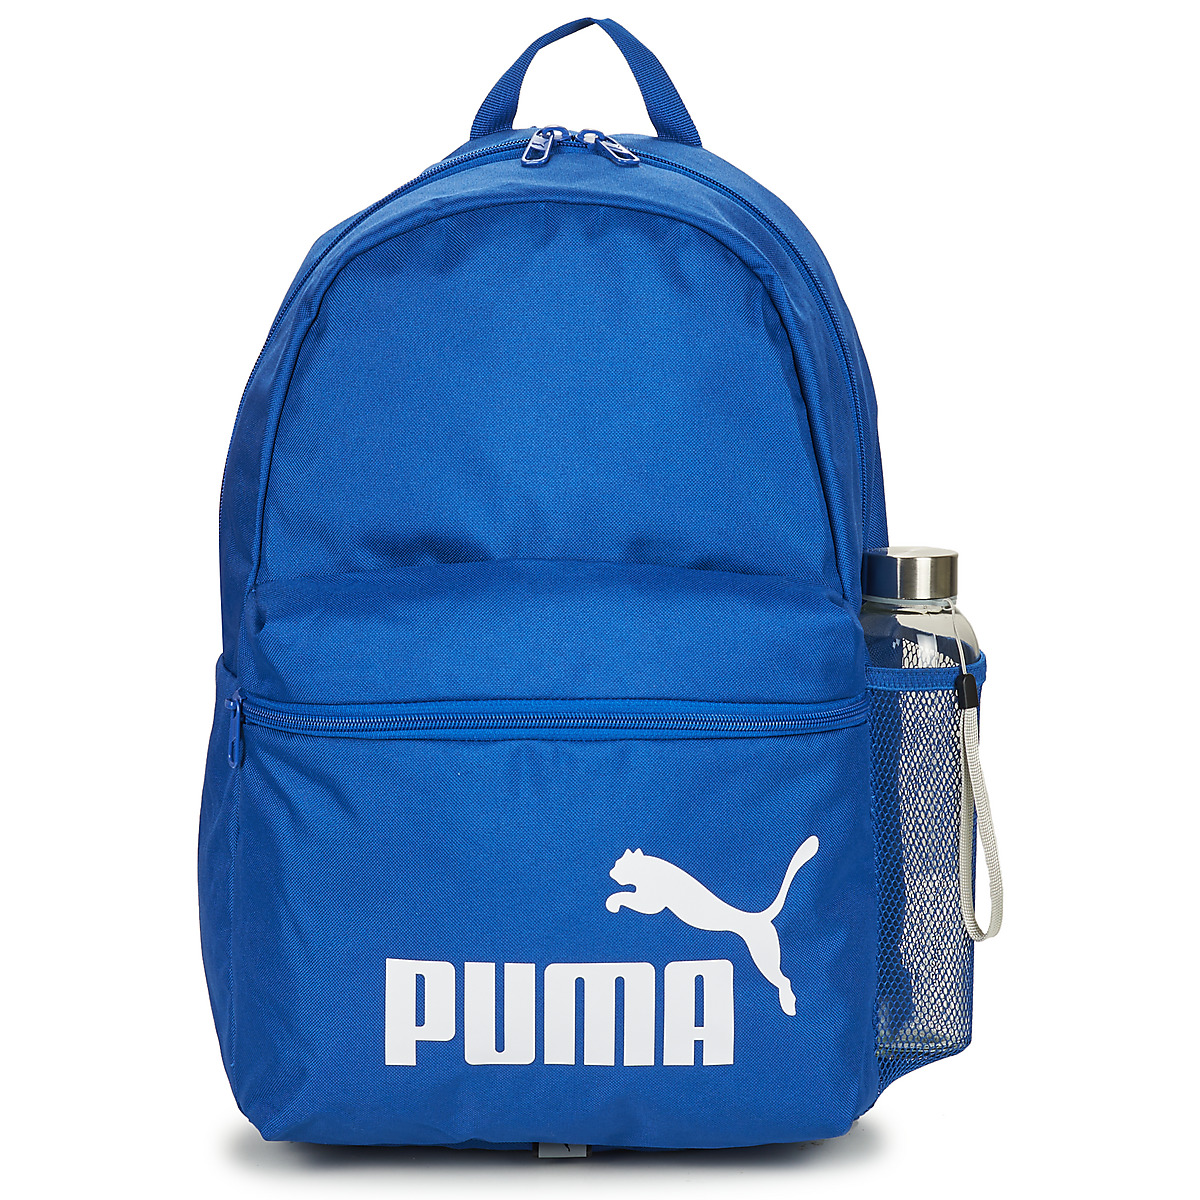 Puma Bleu PUMA PHASE BACKPACK 2wvF2TFm